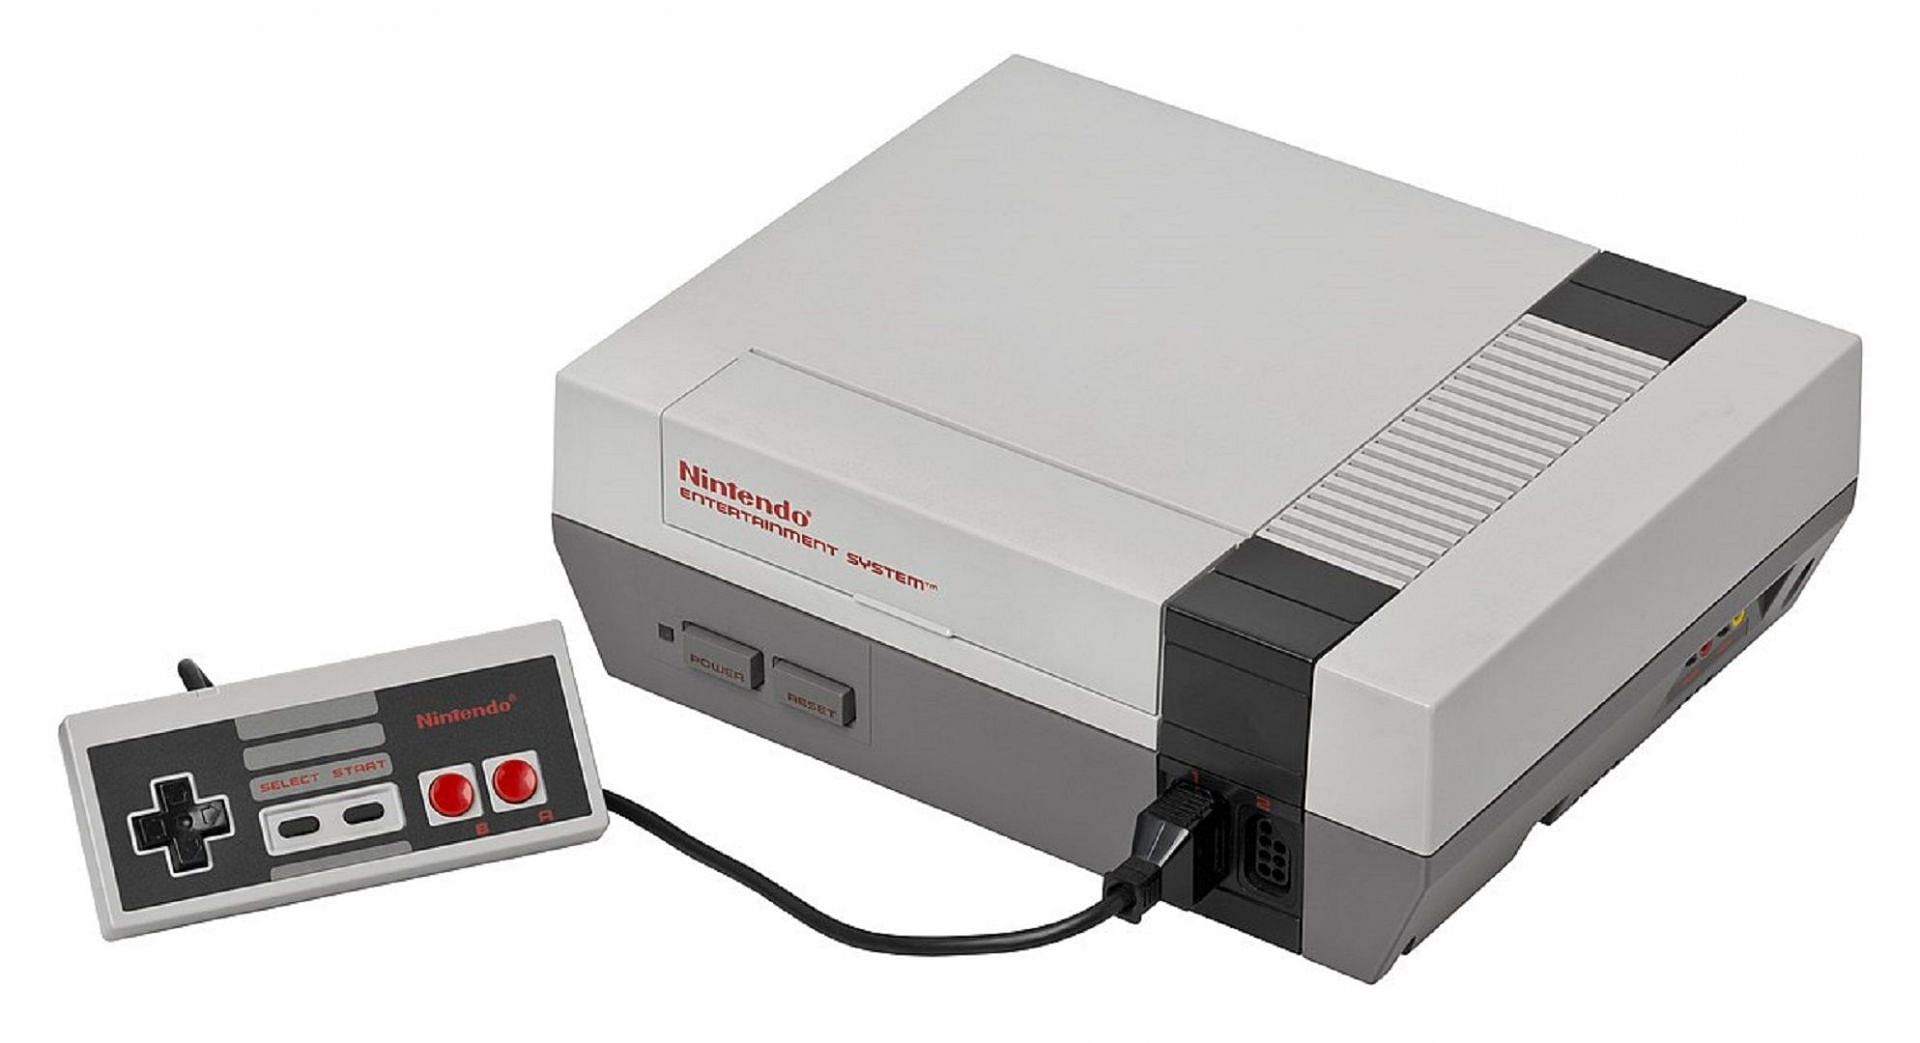 An original Nintendo Entertainment System (Image via Wikipedia.org)